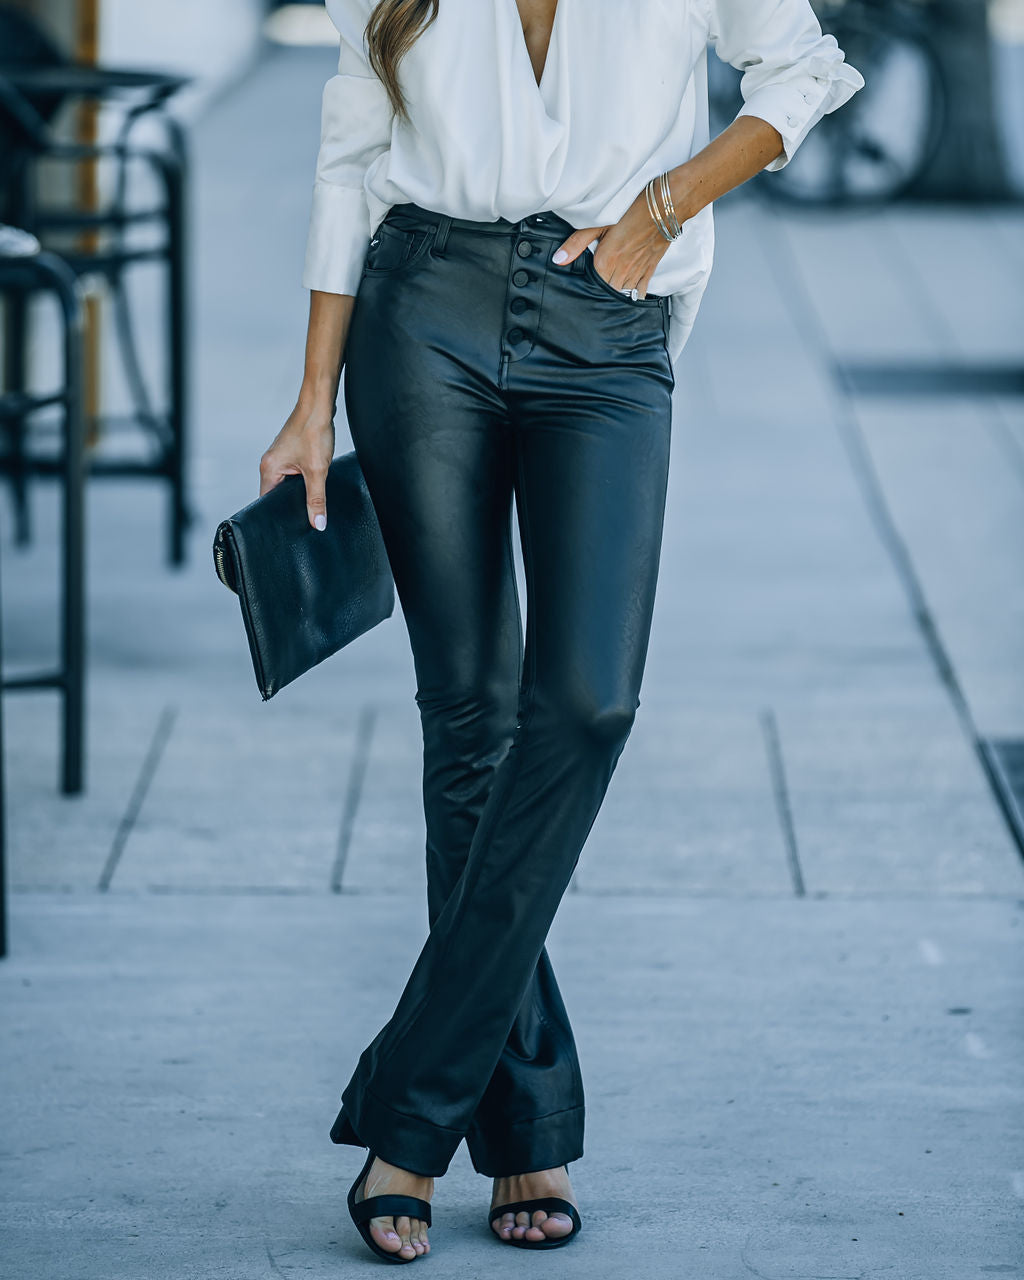 Lexa Faux Leather Flare Pants (Black)